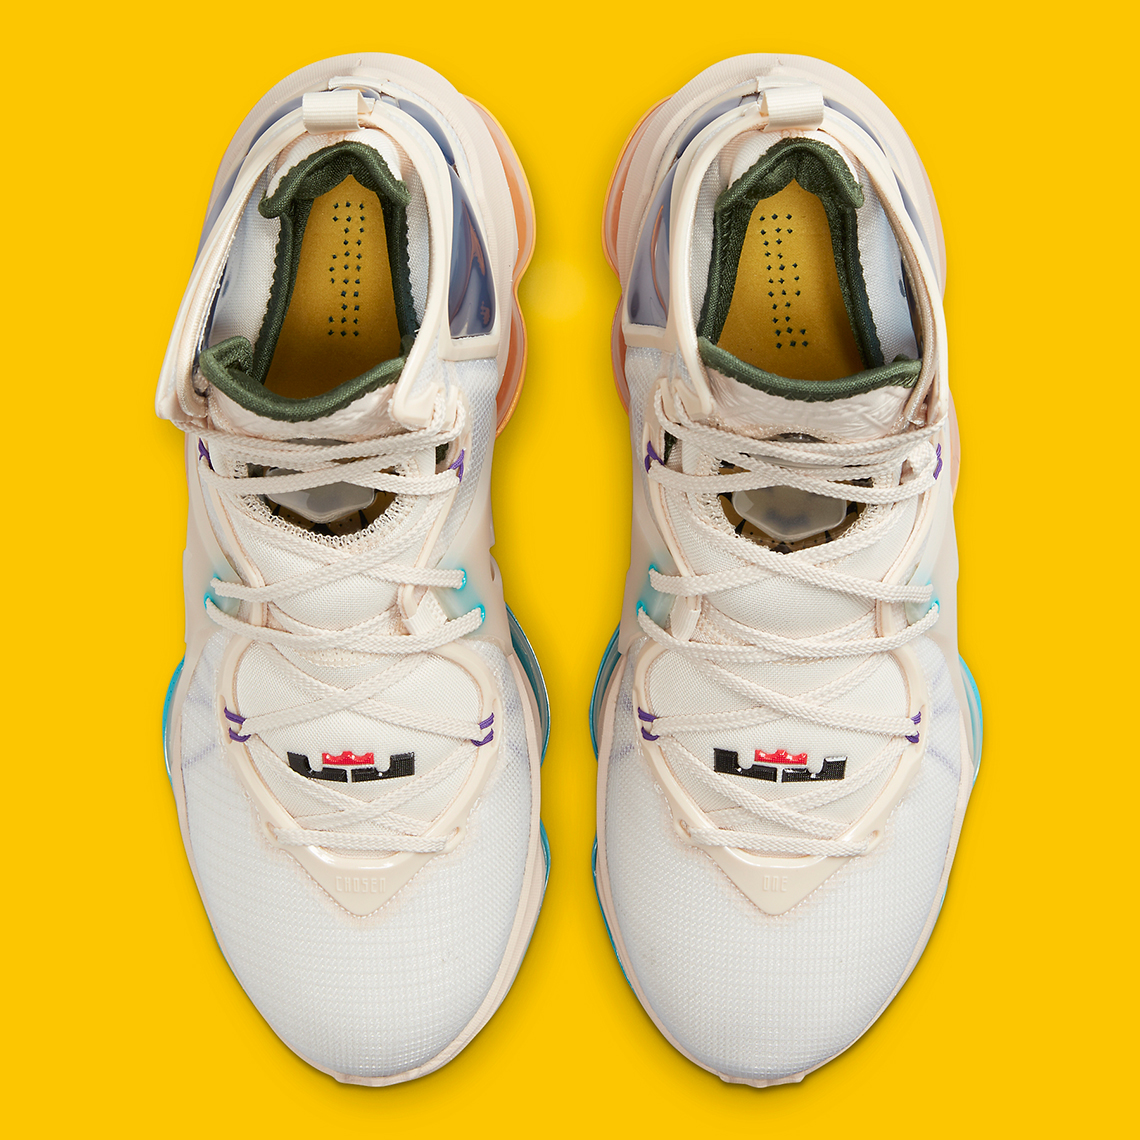 Nike LeBron 19 “Minneapolis Lakers” Men's Basketball Shoes - Style